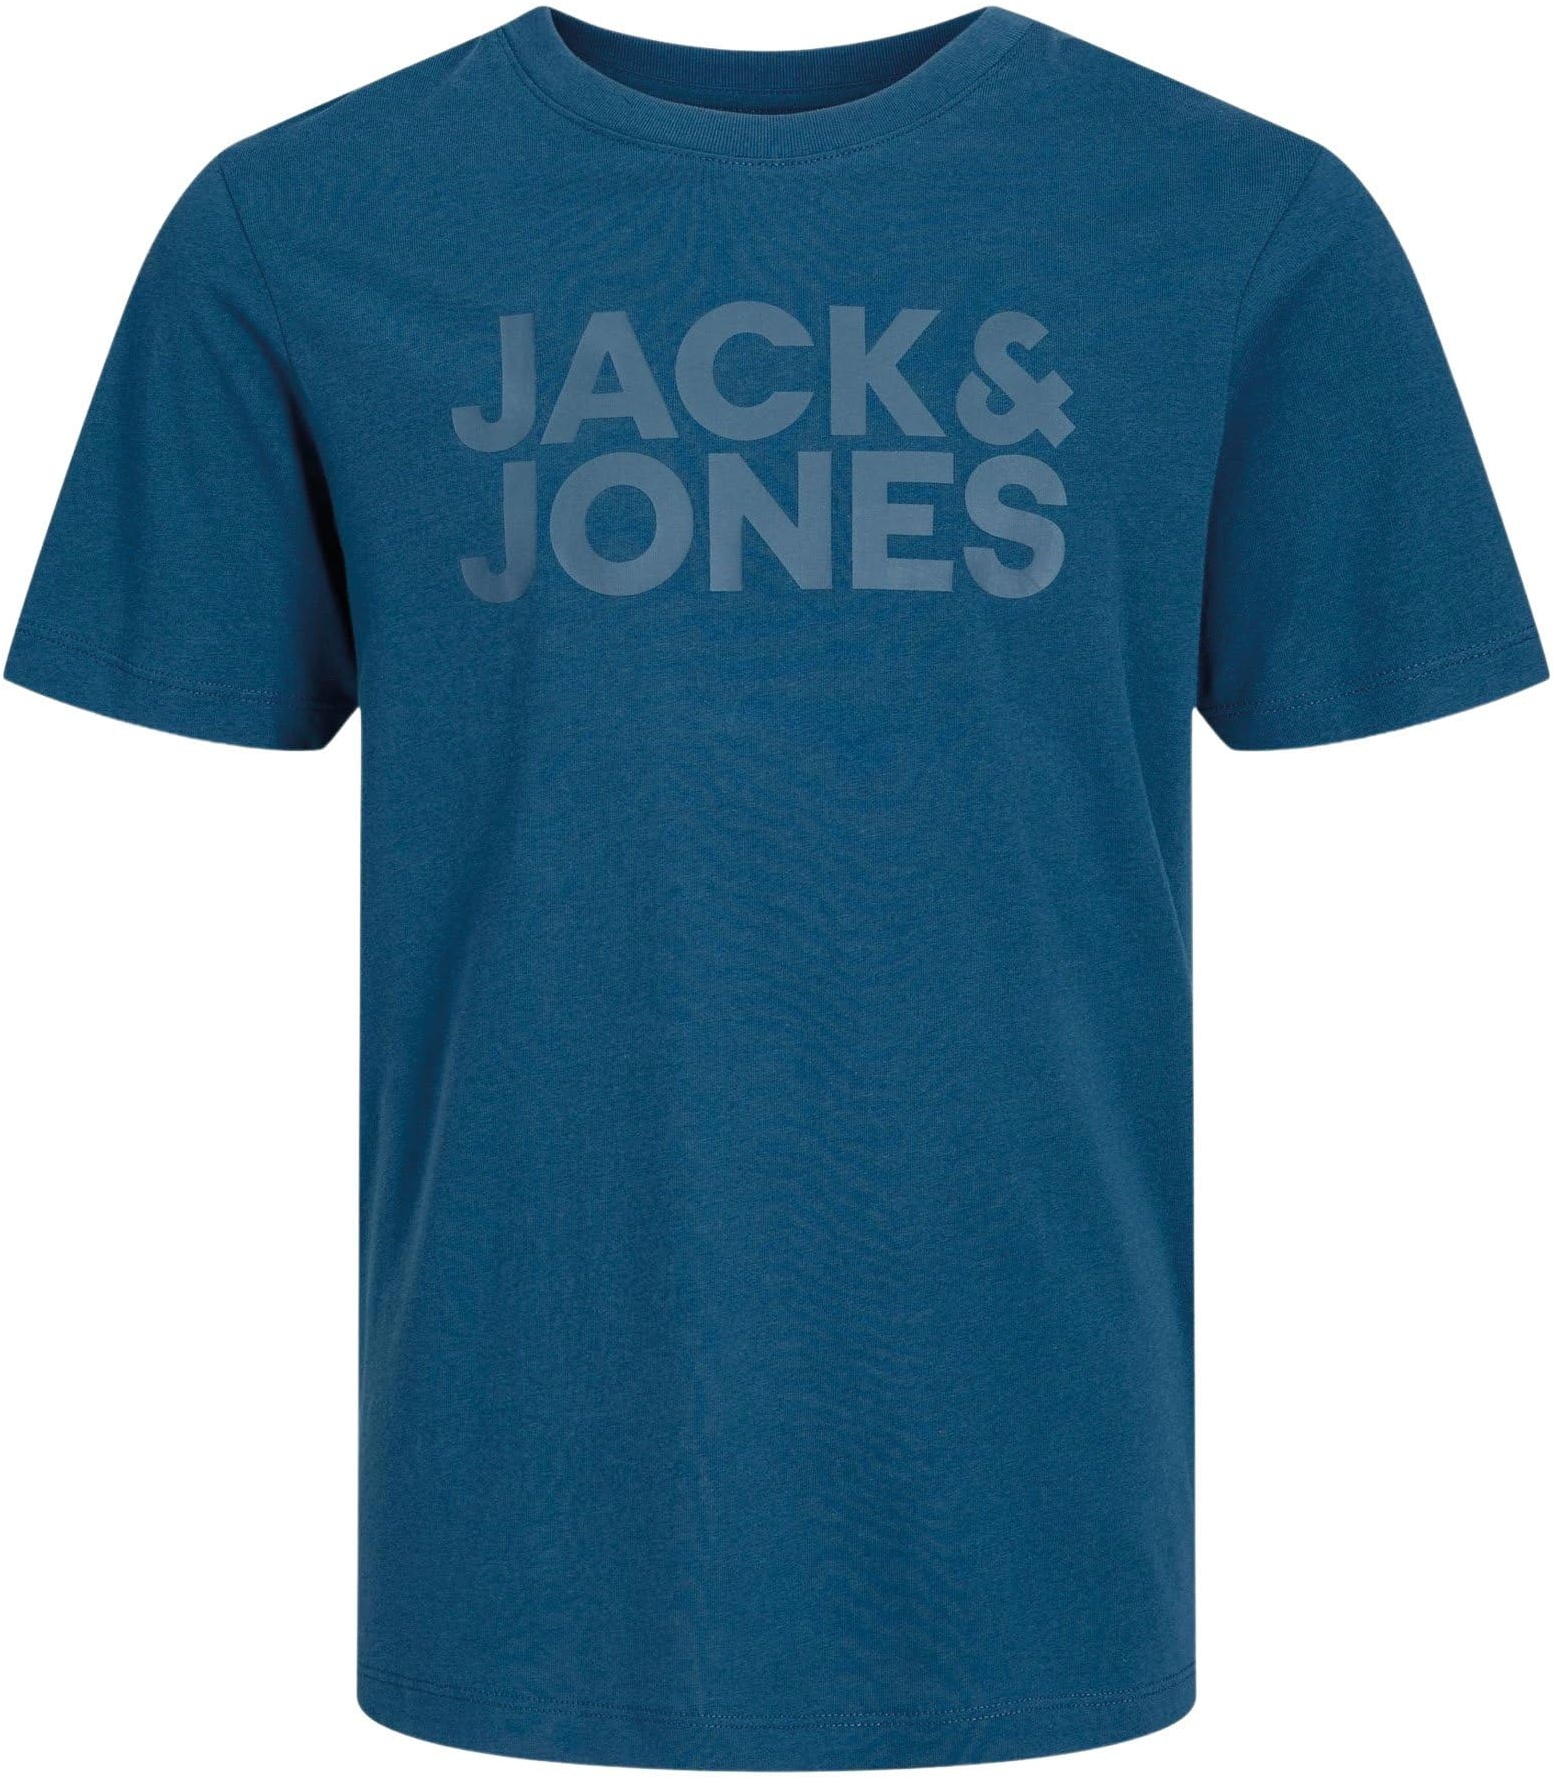 Jack & Jones Logo Shirt Kinder - 140